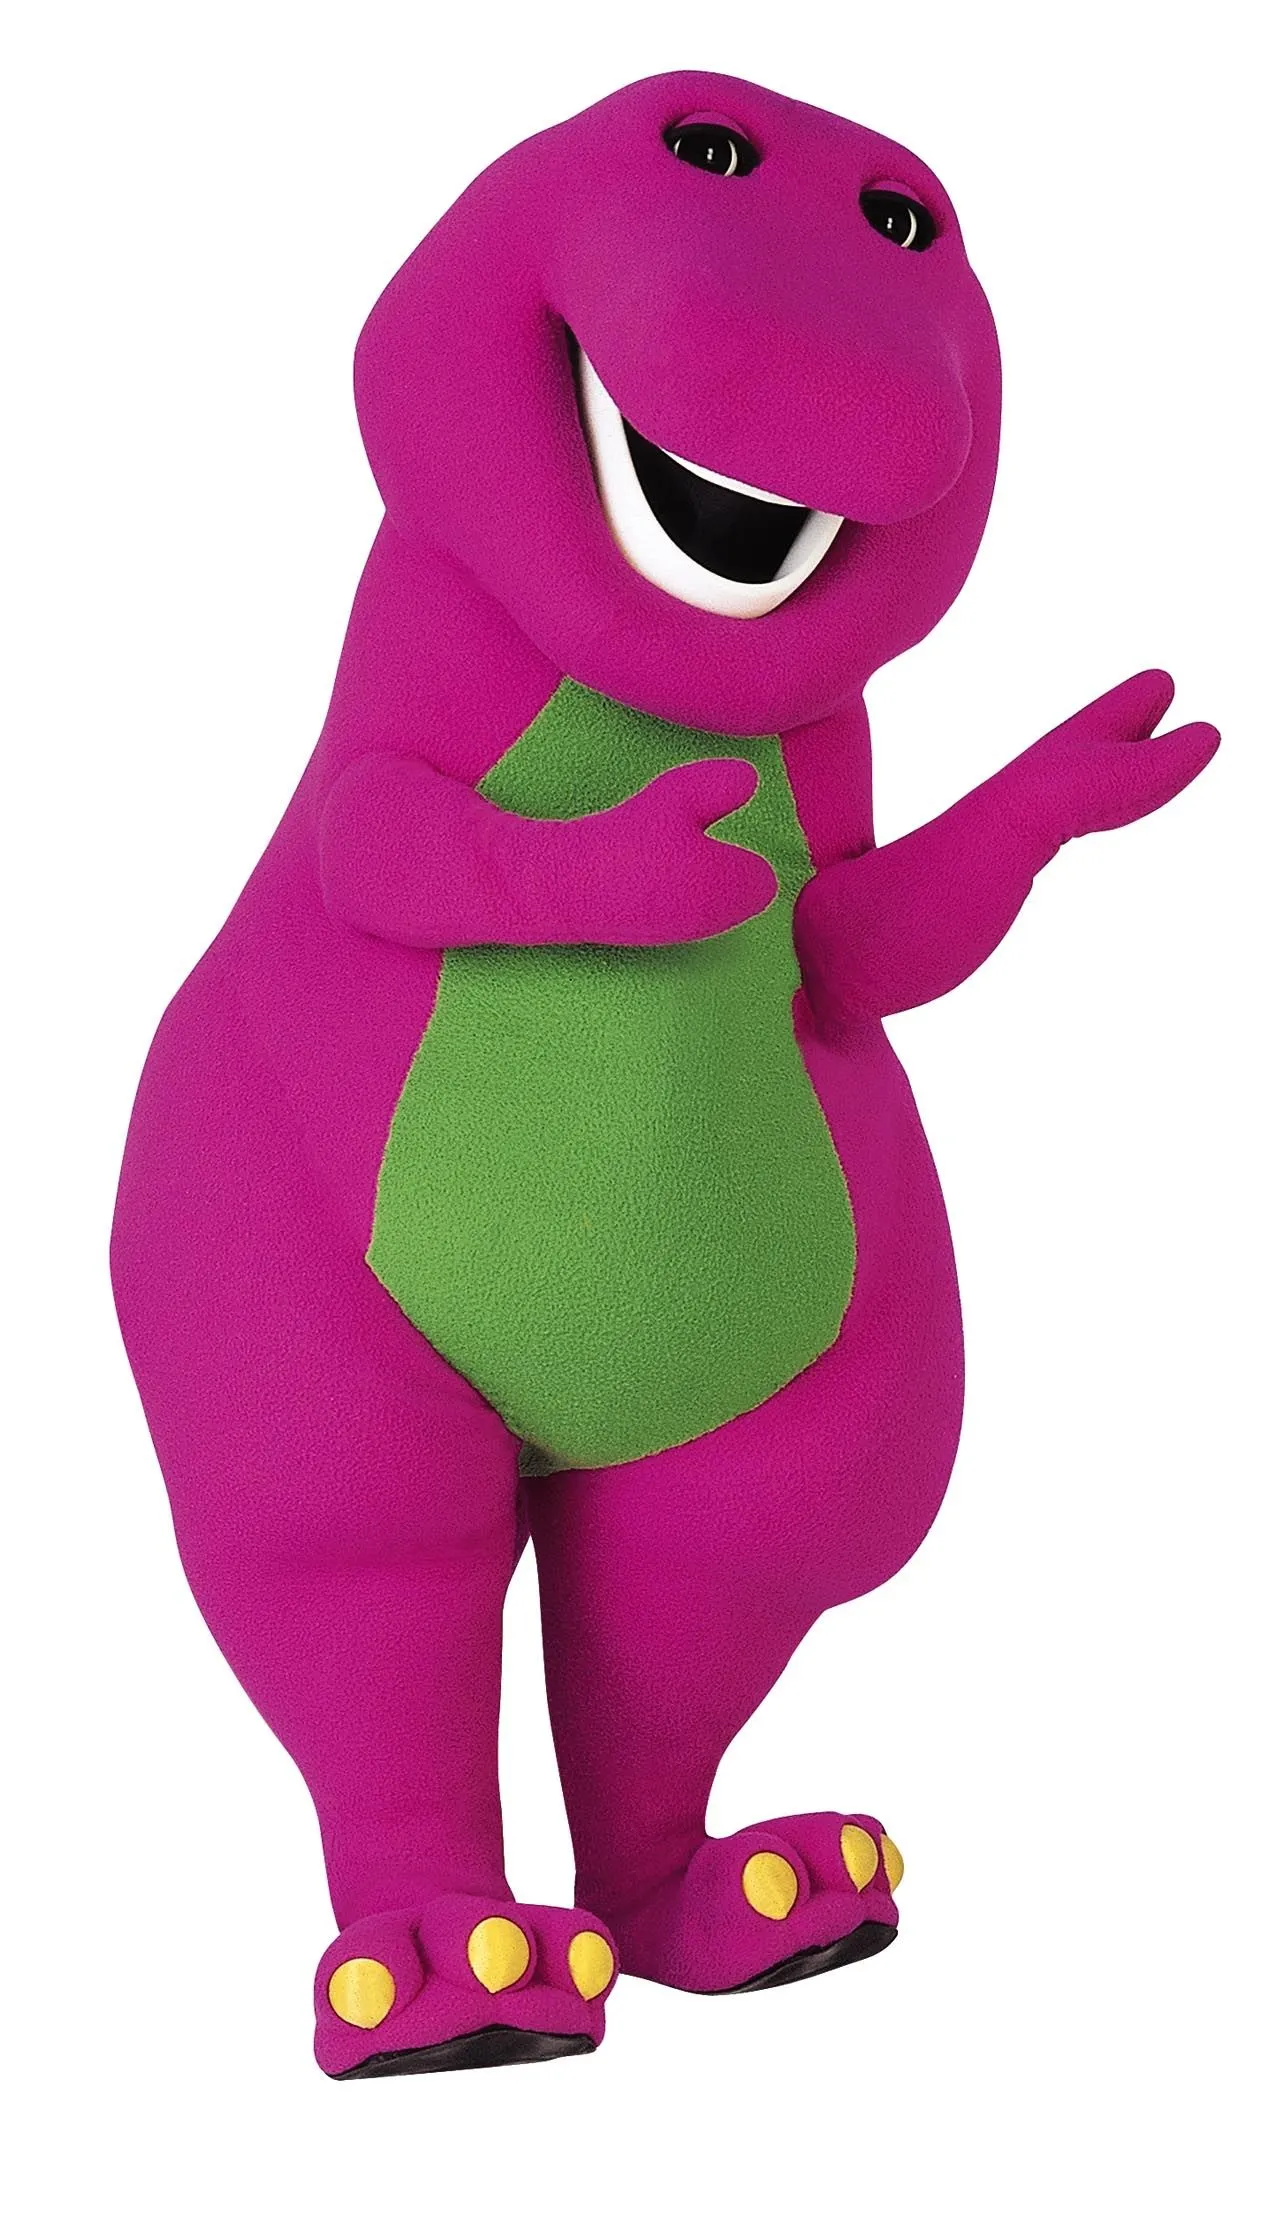 Barney the Dinosaur - Heroes Wiki